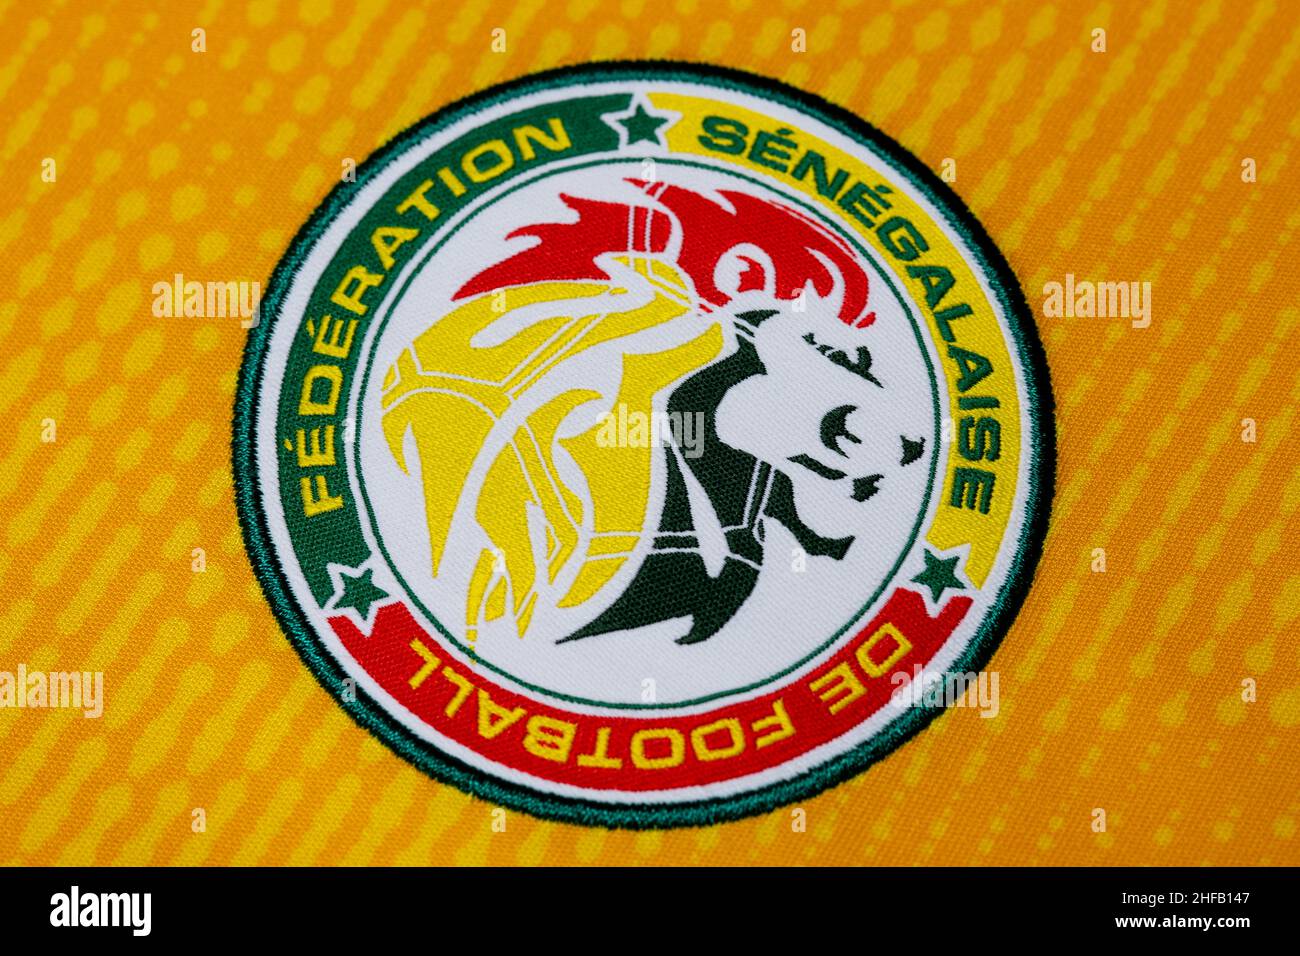 Close up of Senegal National Football team kit. Stock Photo